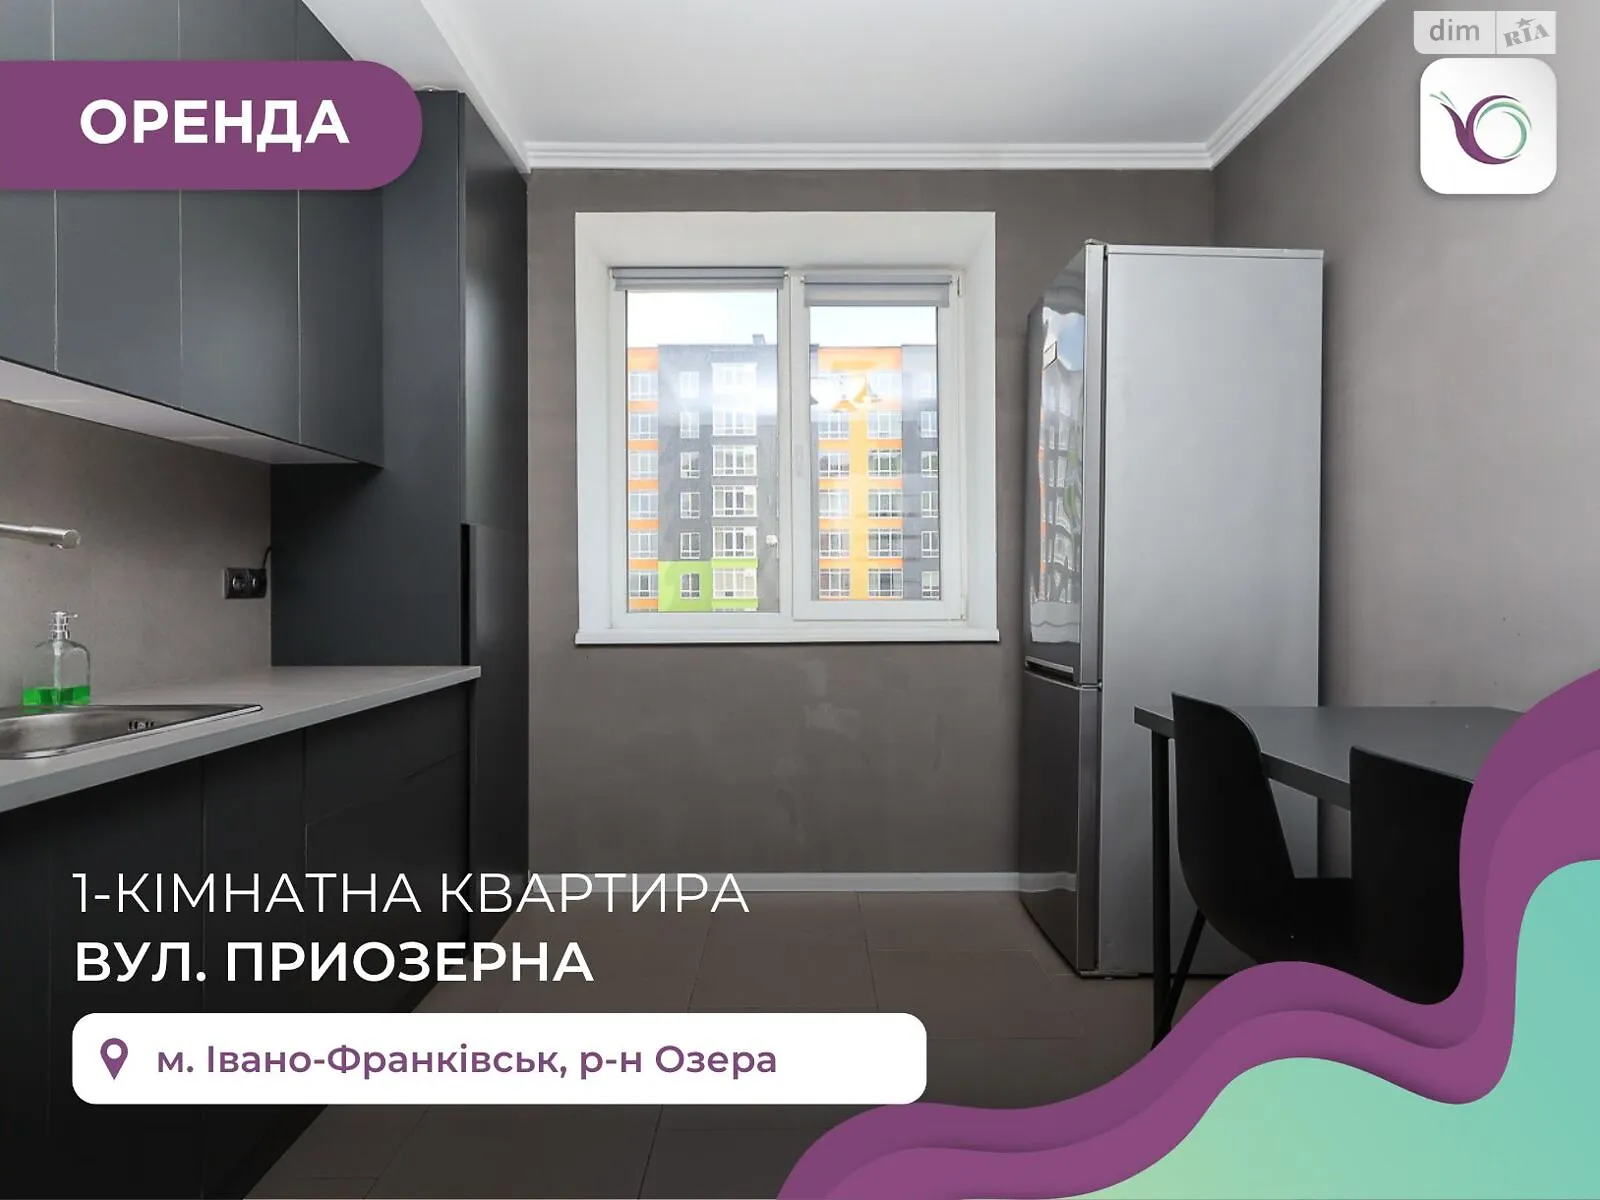 Сдается в аренду 1-комнатная квартира 40 кв. м в Ивано-Франковске, ул. Приозерная - фото 1